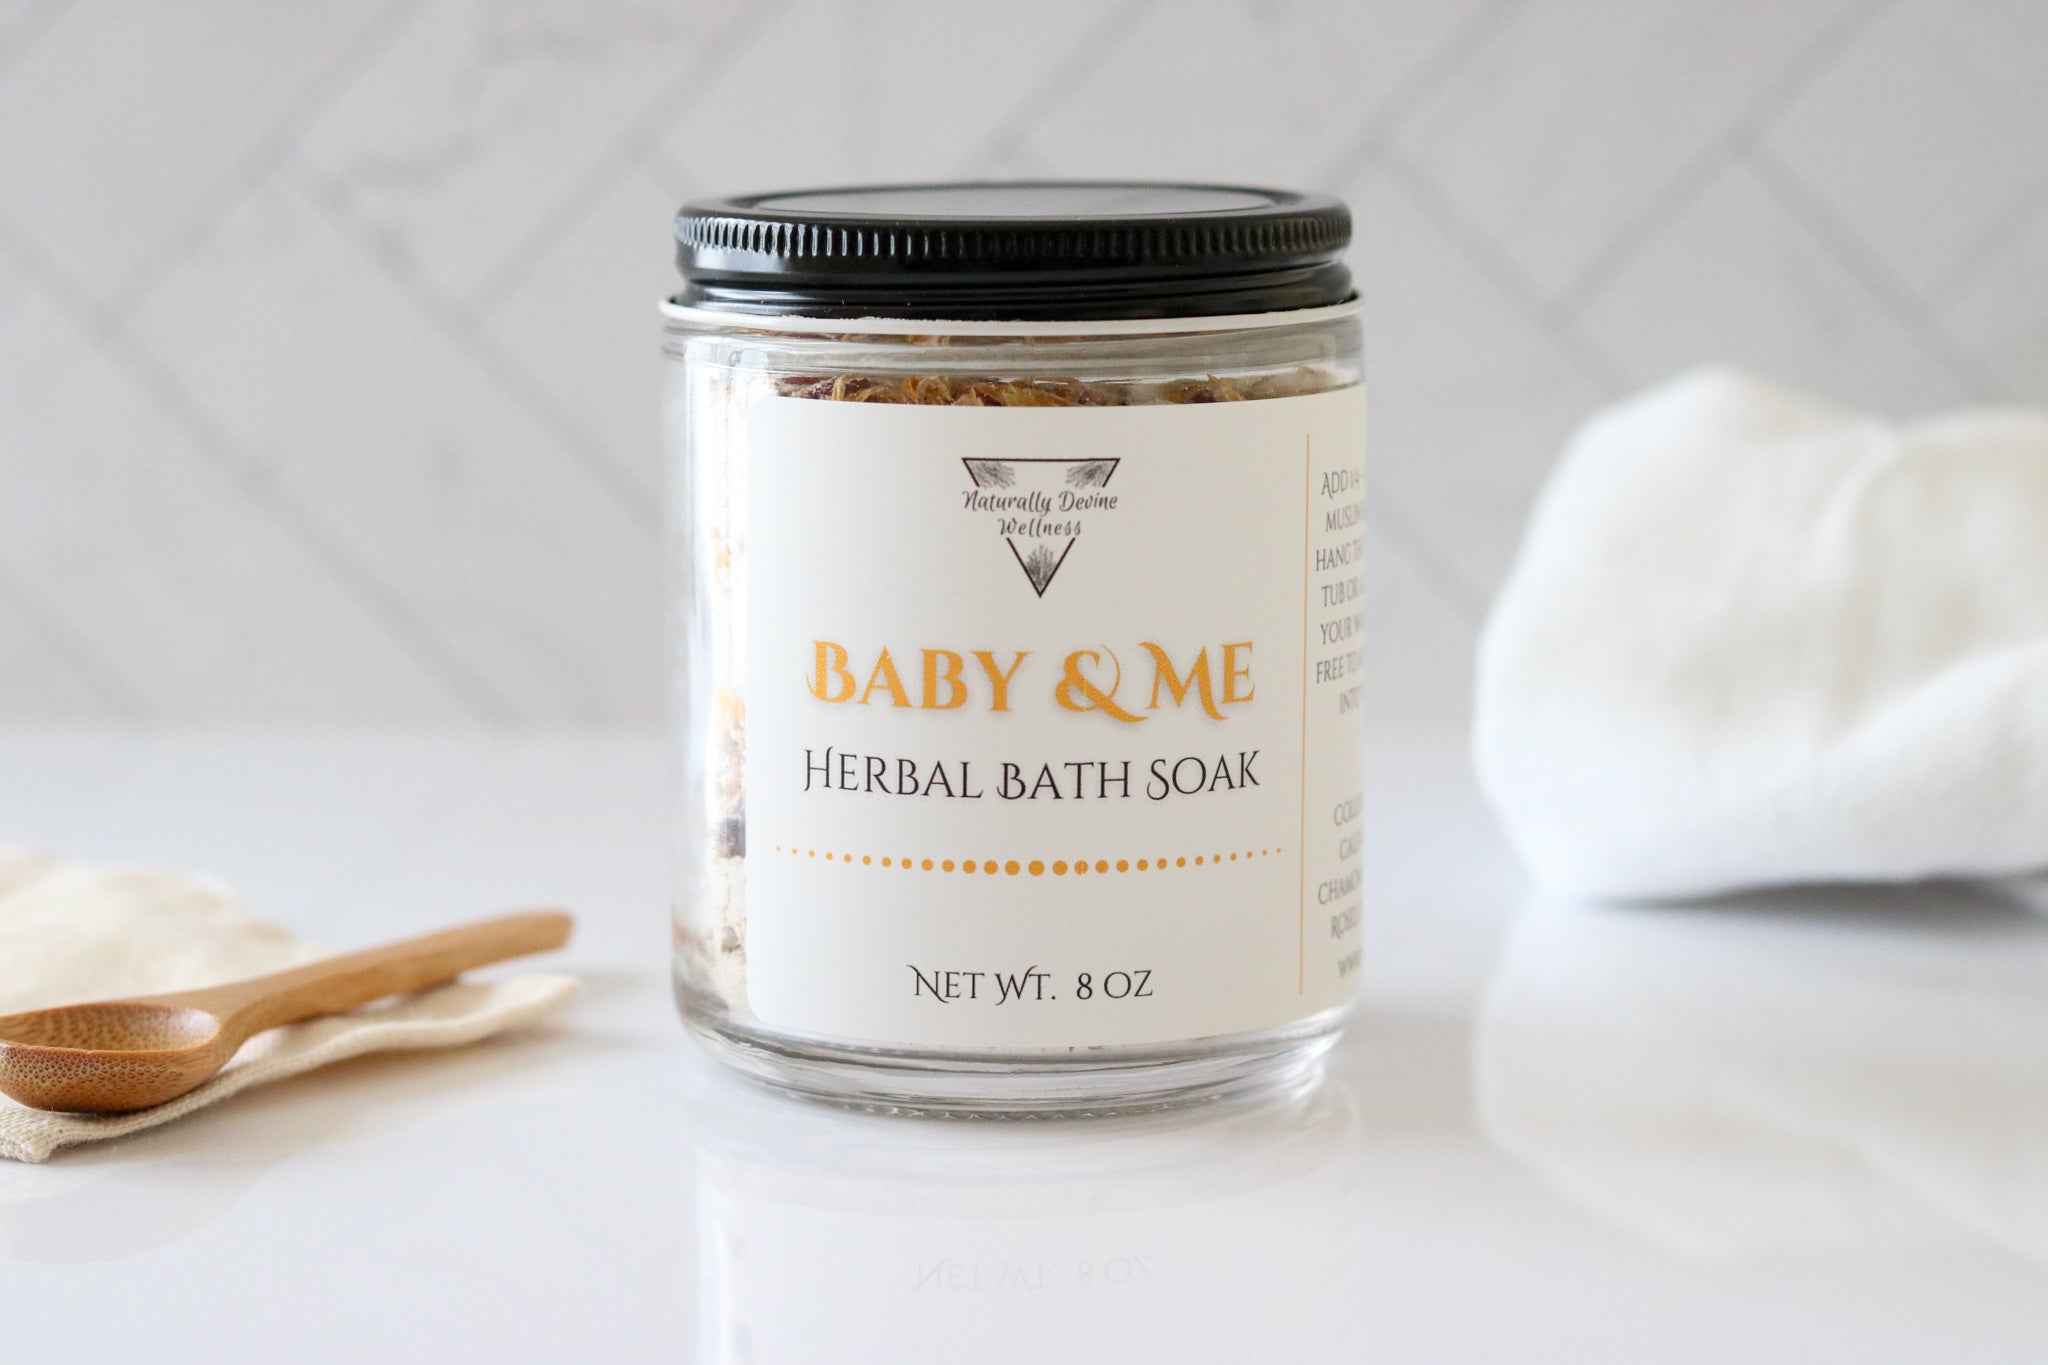 Baby & Me Herbal Bath Soak - Naturally Devine Wellness